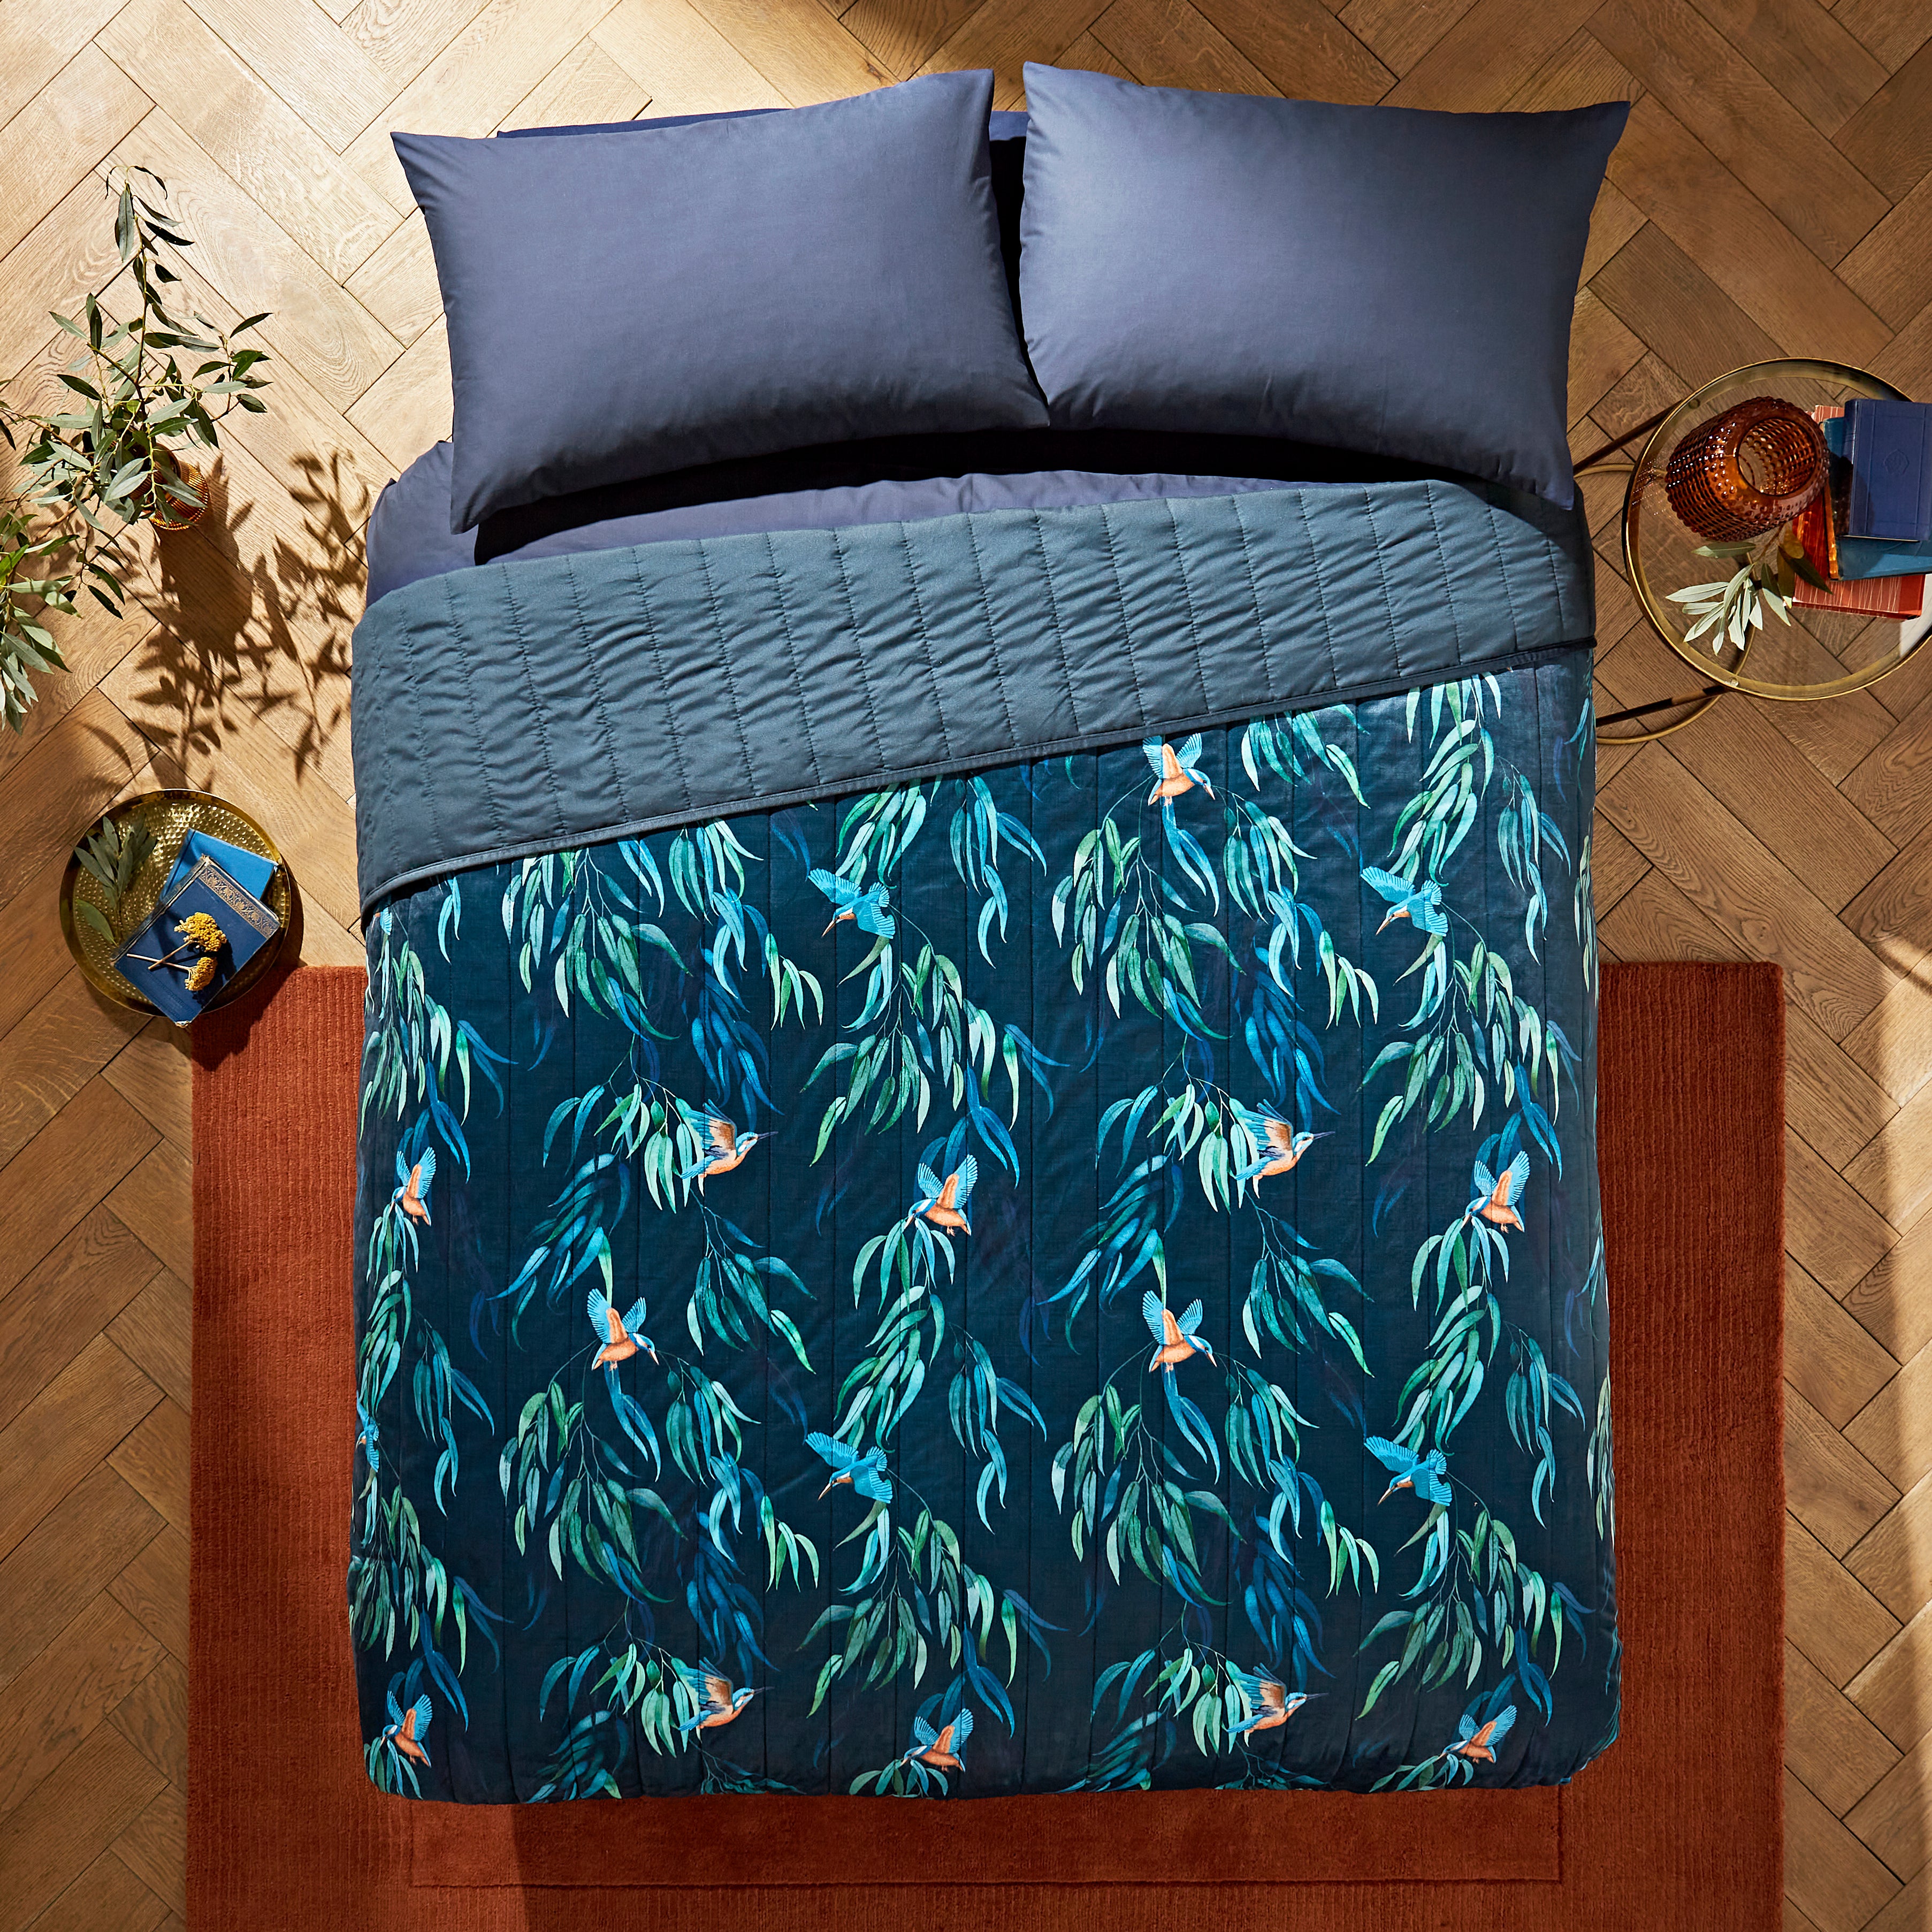 Kingfisher Peacock Bedspread Greenblue